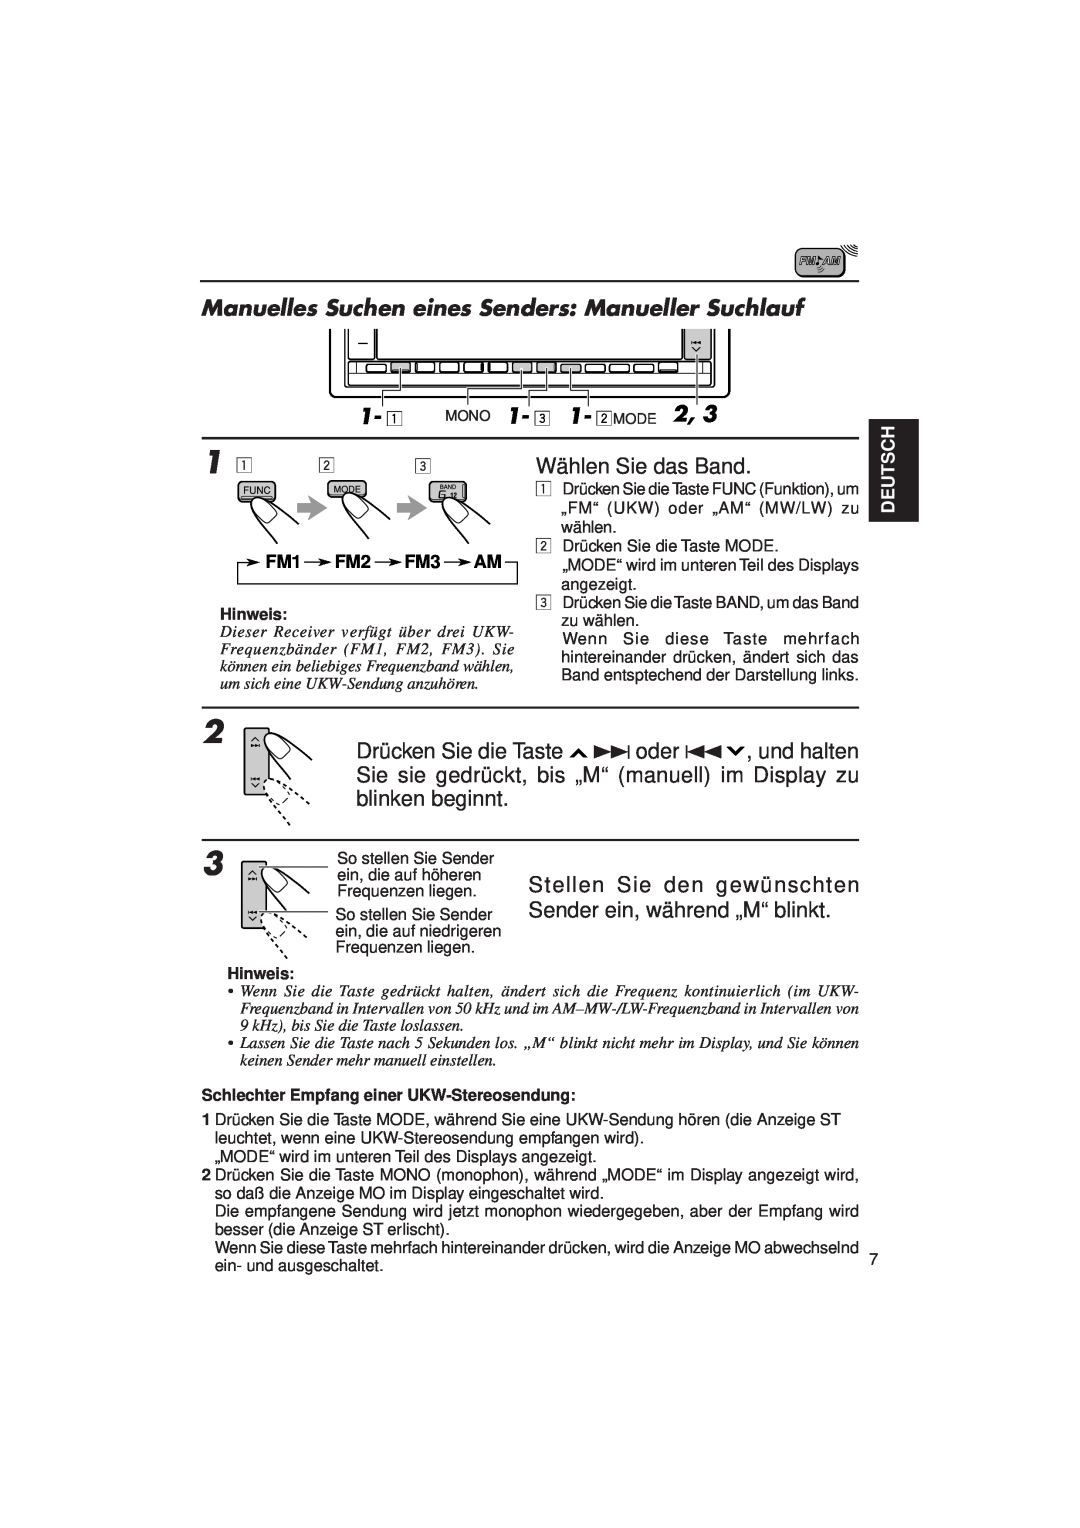 JVC KD-LX3R manual FM1 FM2 FM3 AM, Deutsch, Hinweis, Schlechter Empfang einer UKW-Stereosendung 